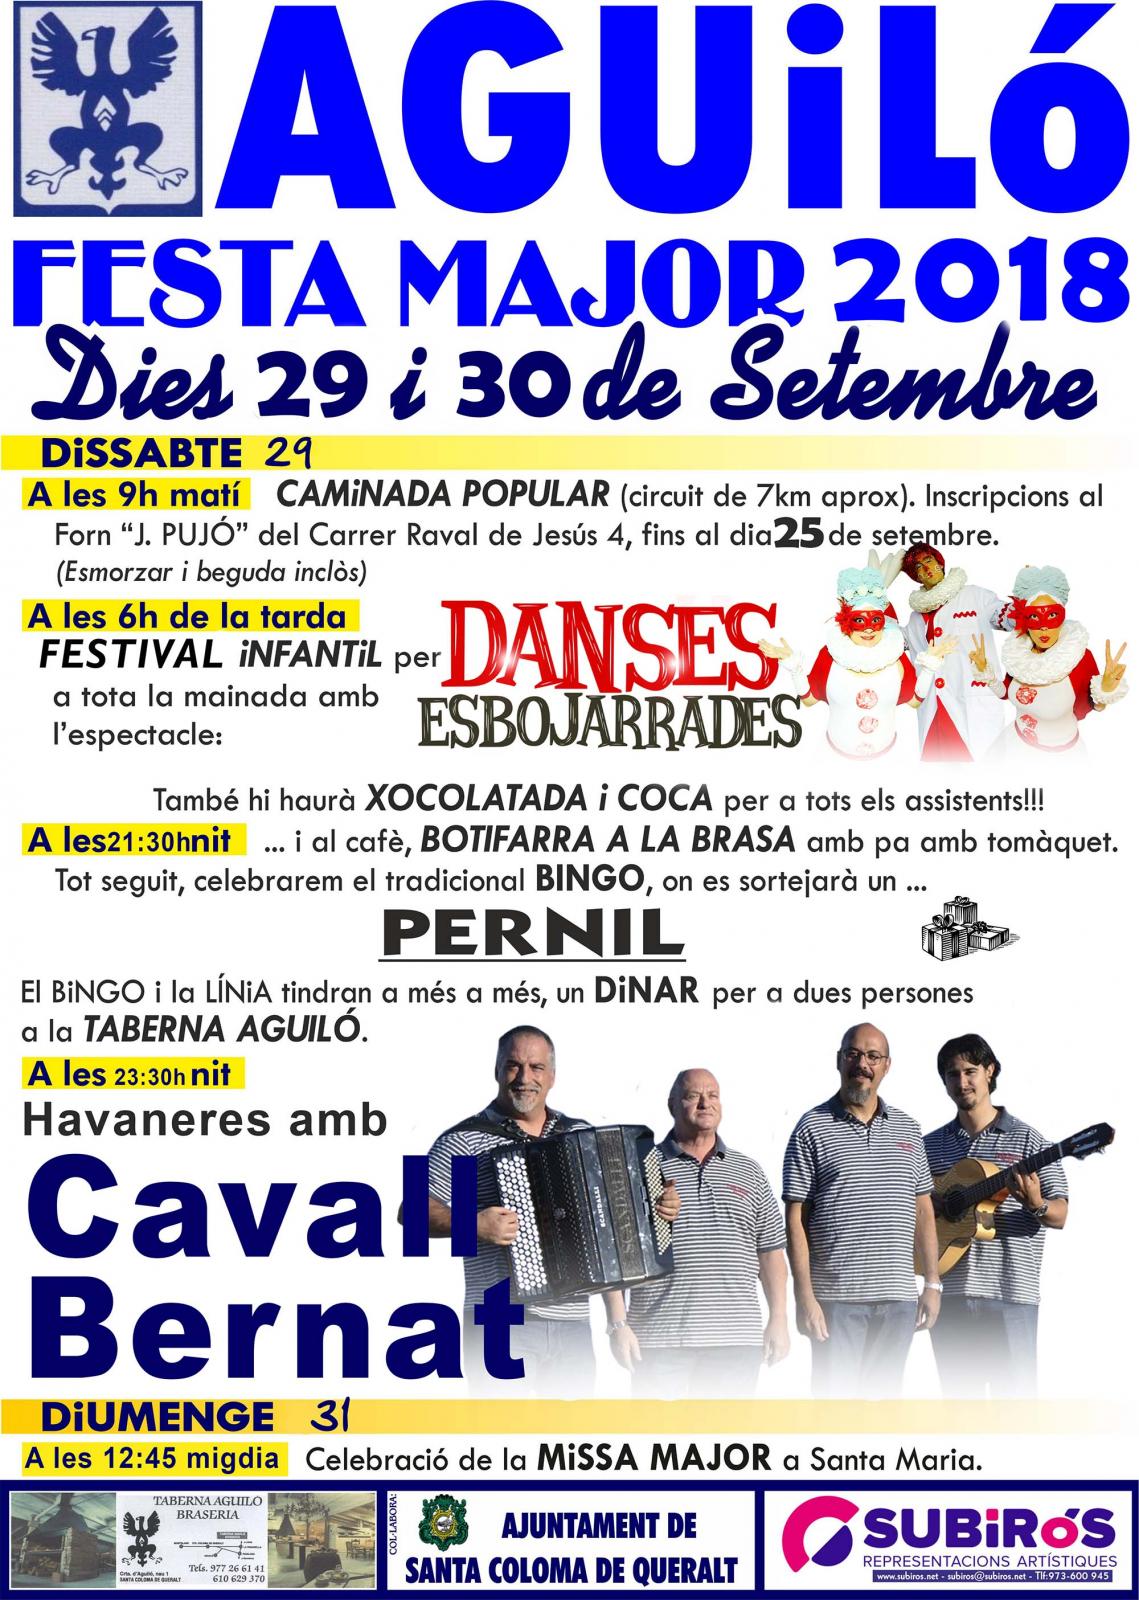 Festa Major d'Aguiló 2018